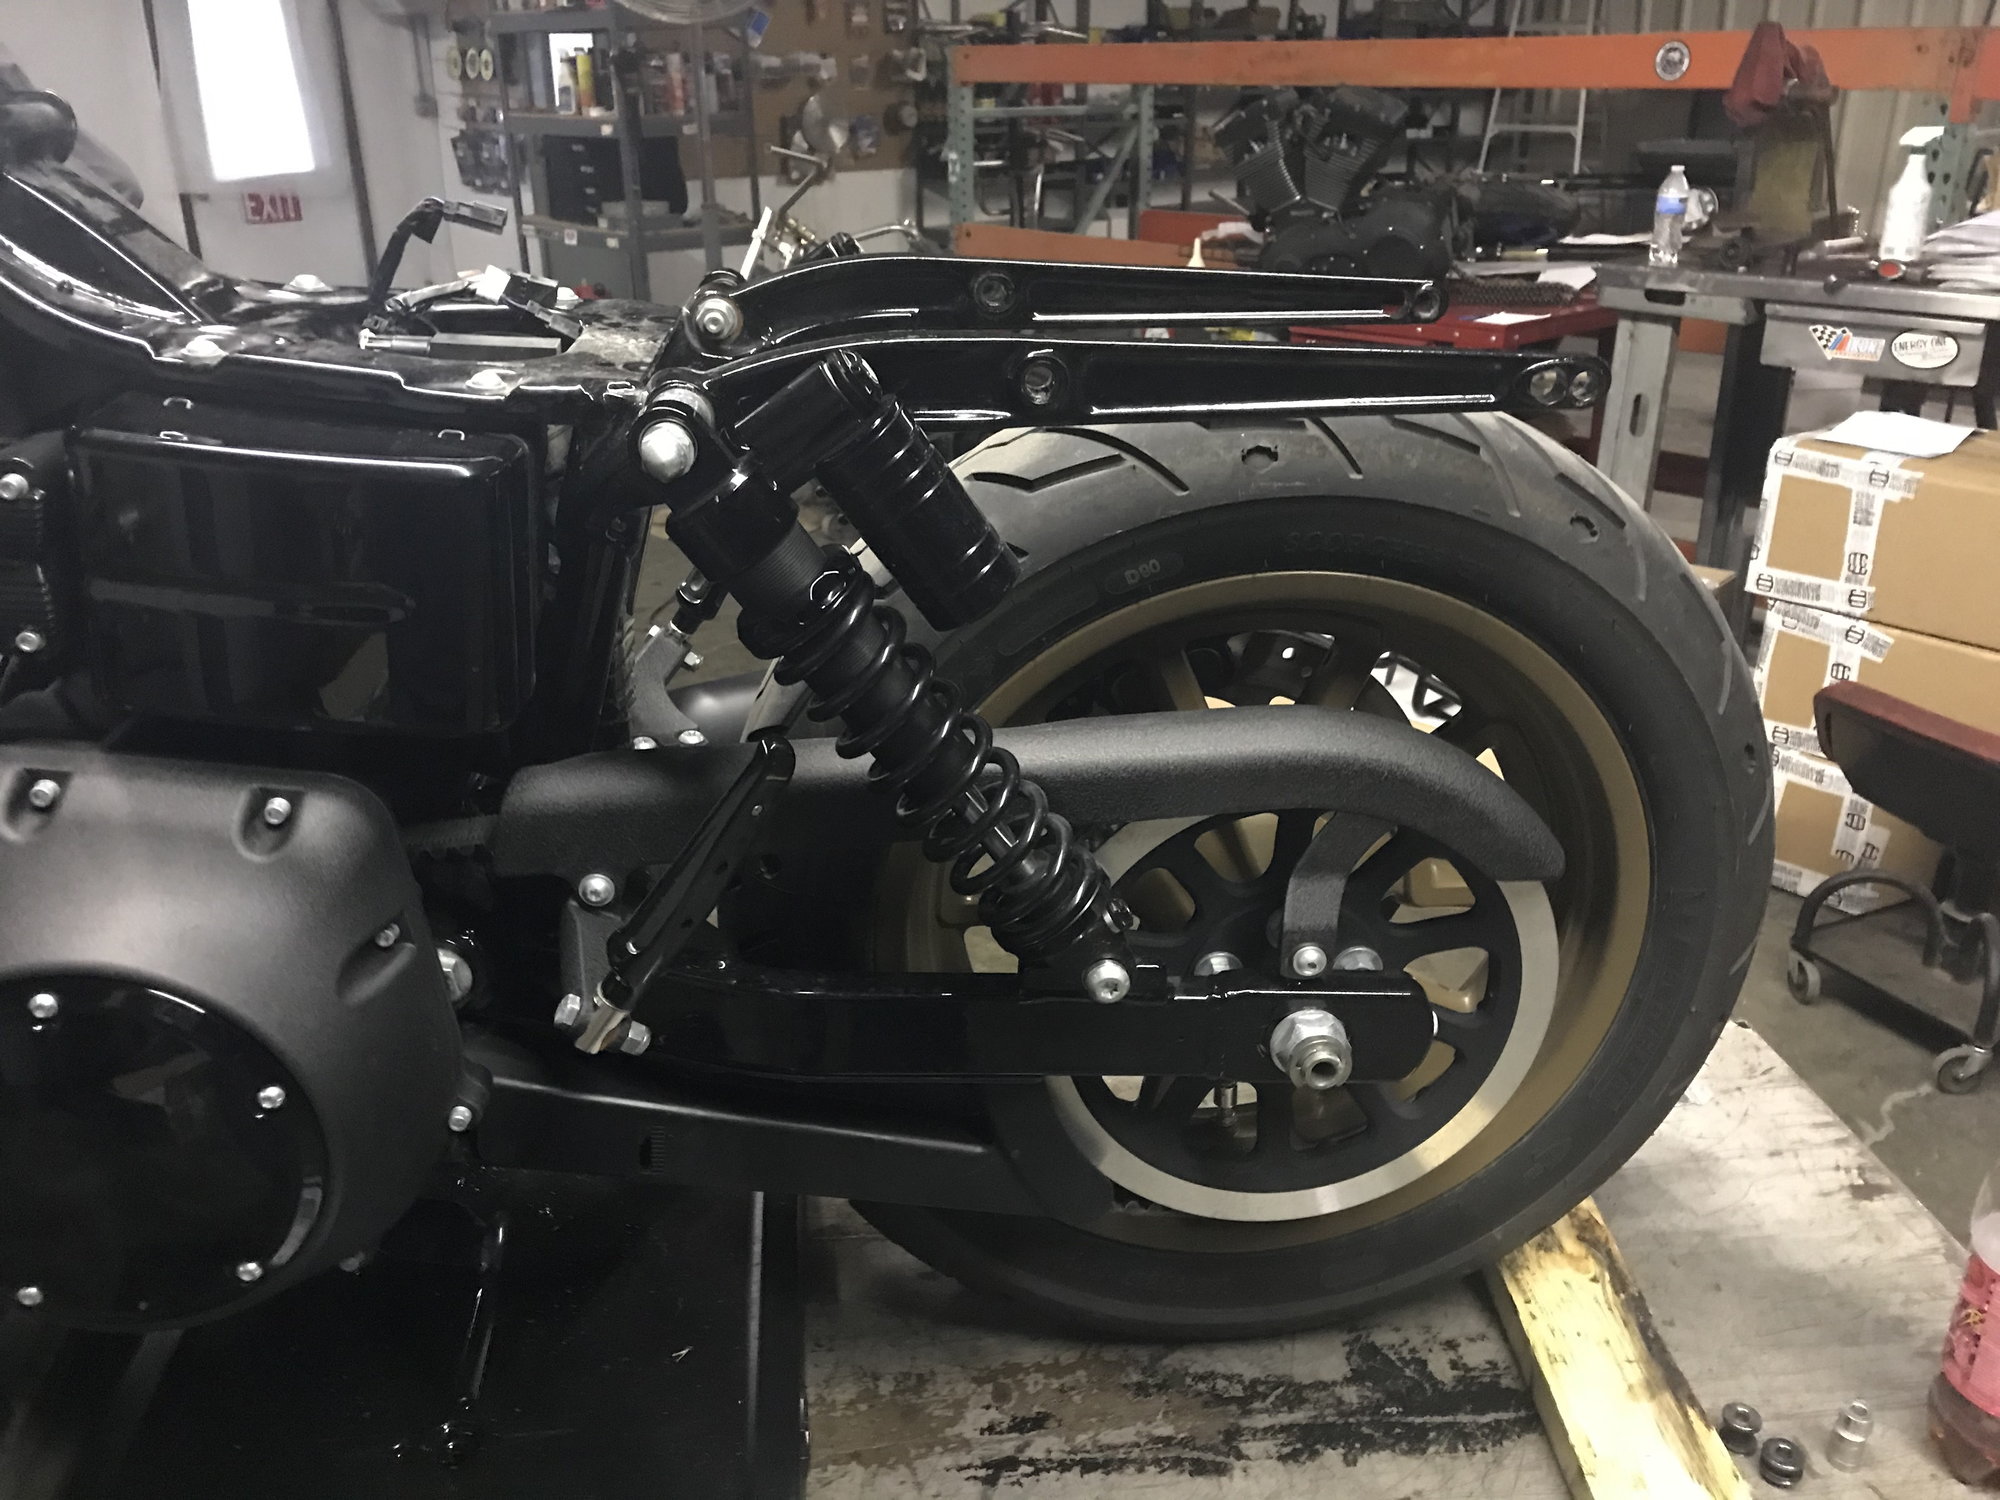 2017 Dyna suspension upgrade - Page 2 - Harley Davidson Forums